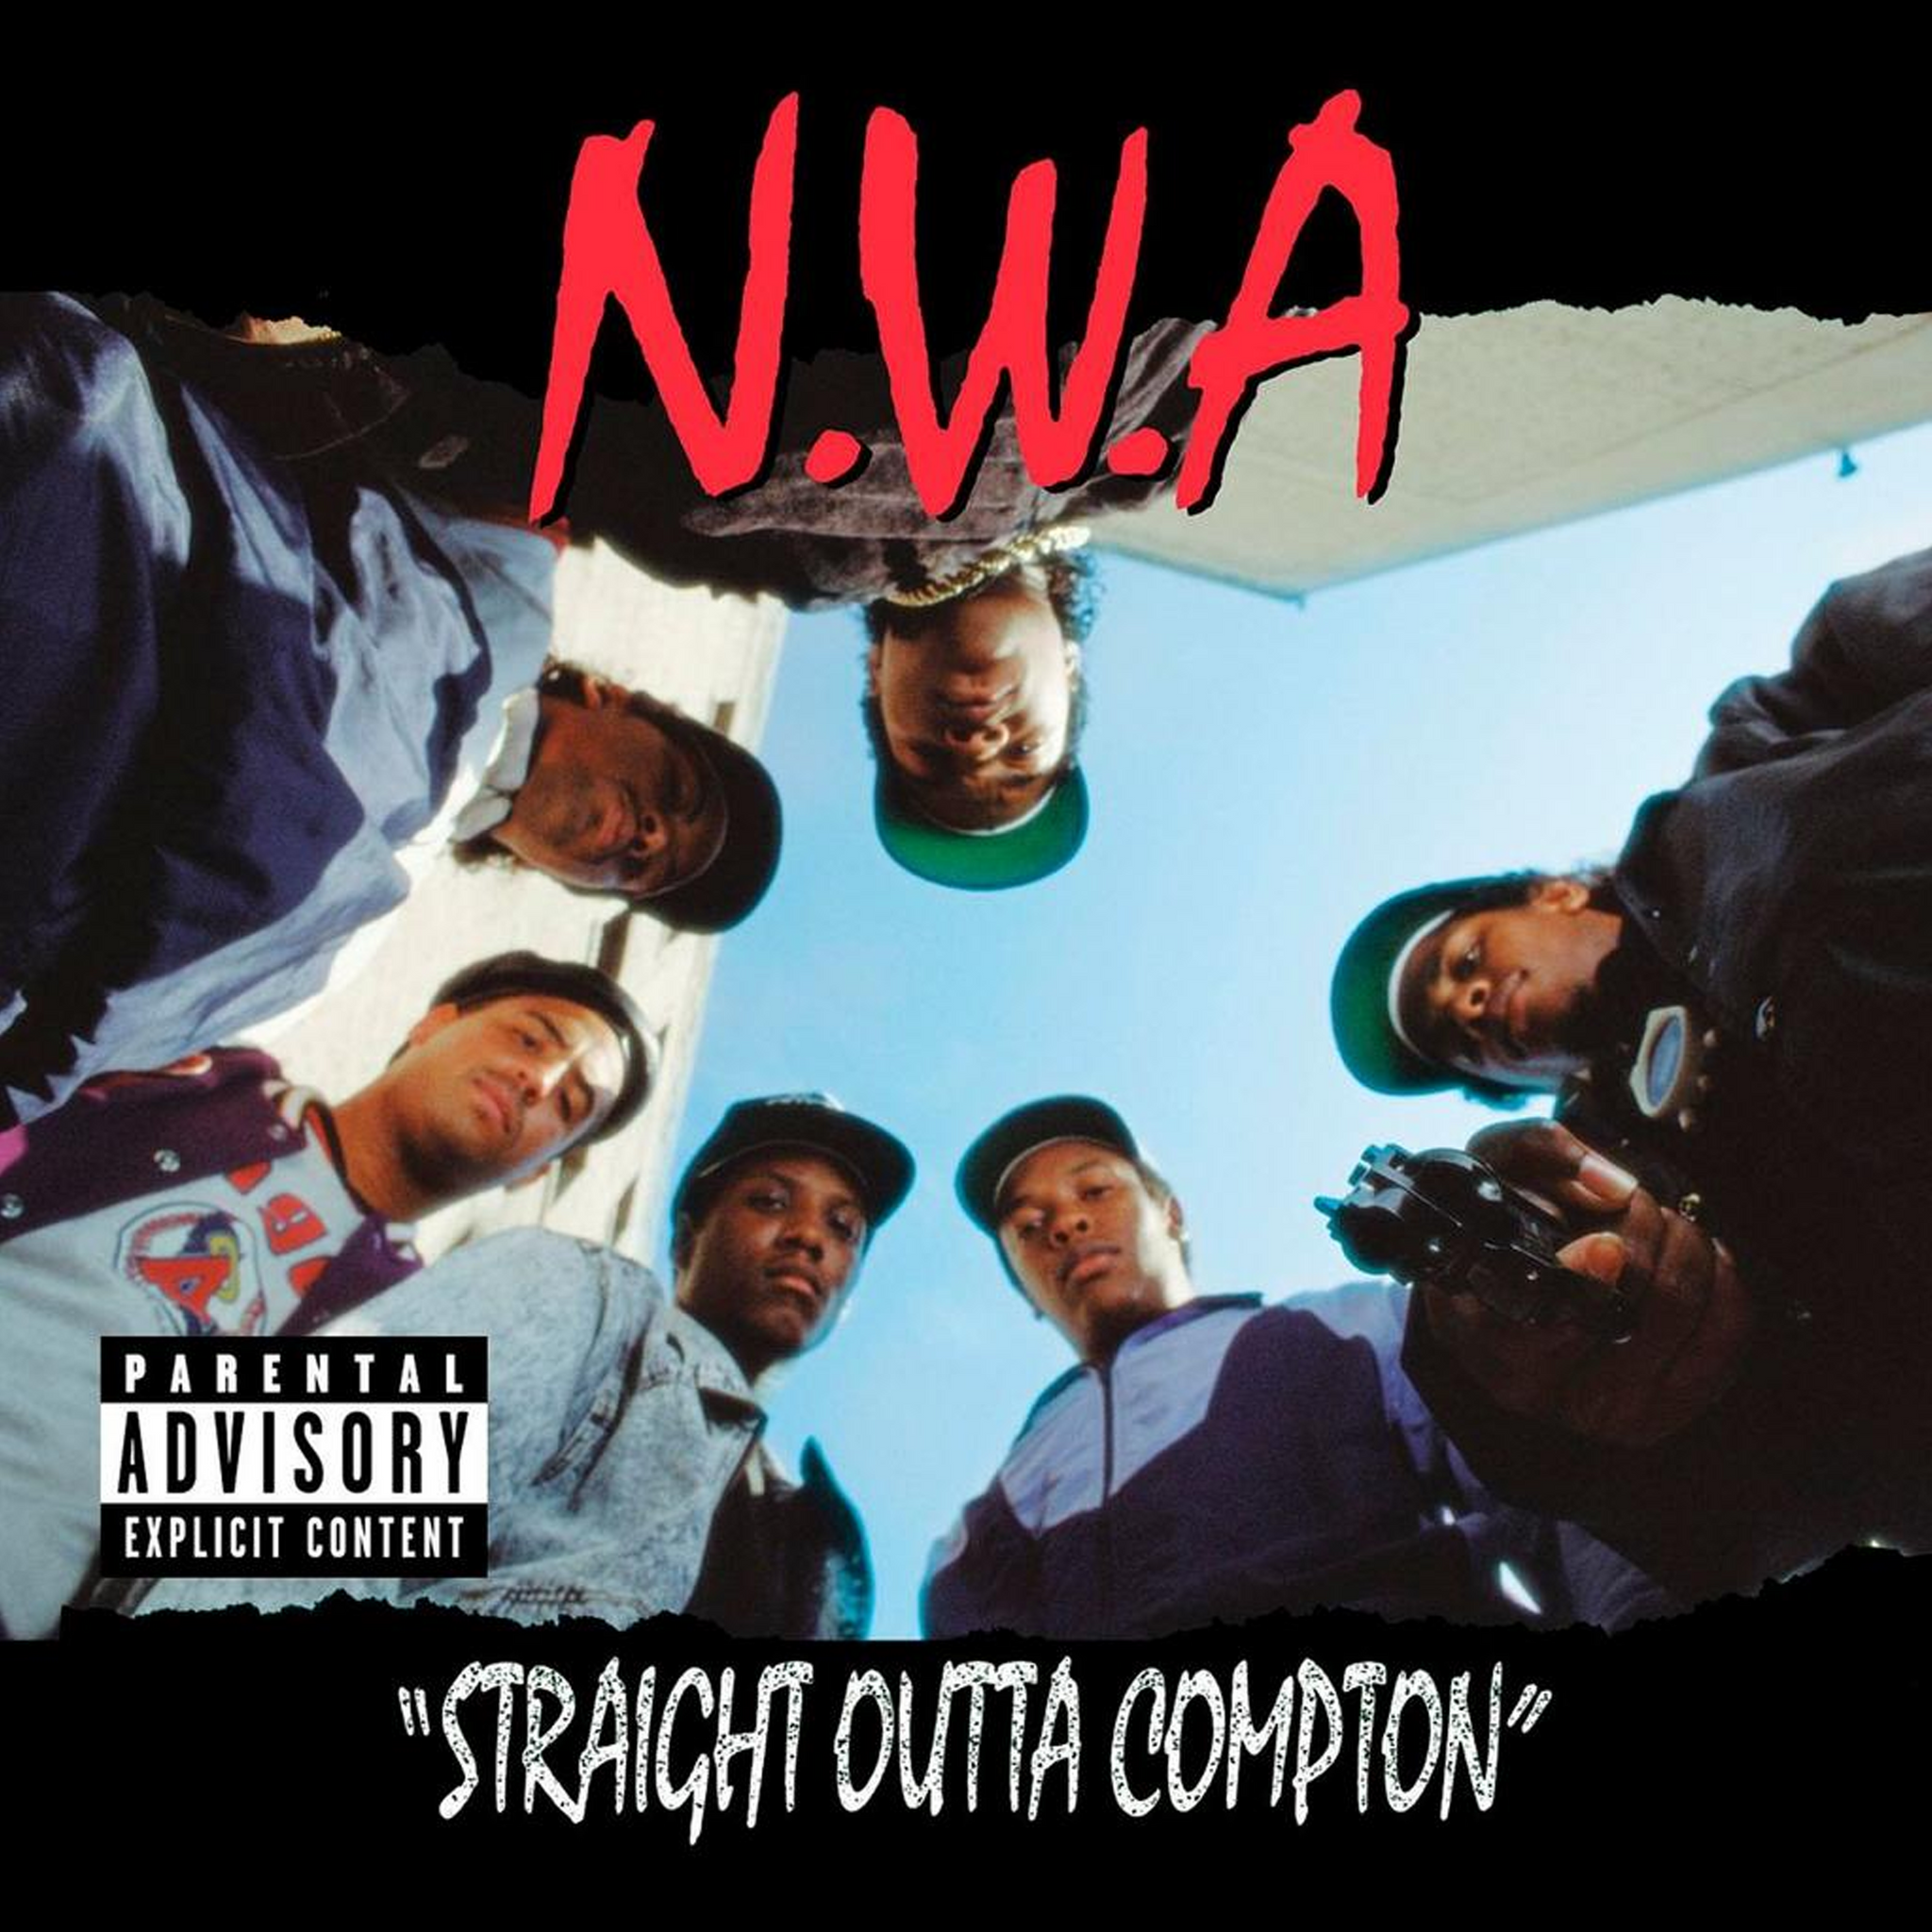 N.W.A. - Straight Outta Compton - CD